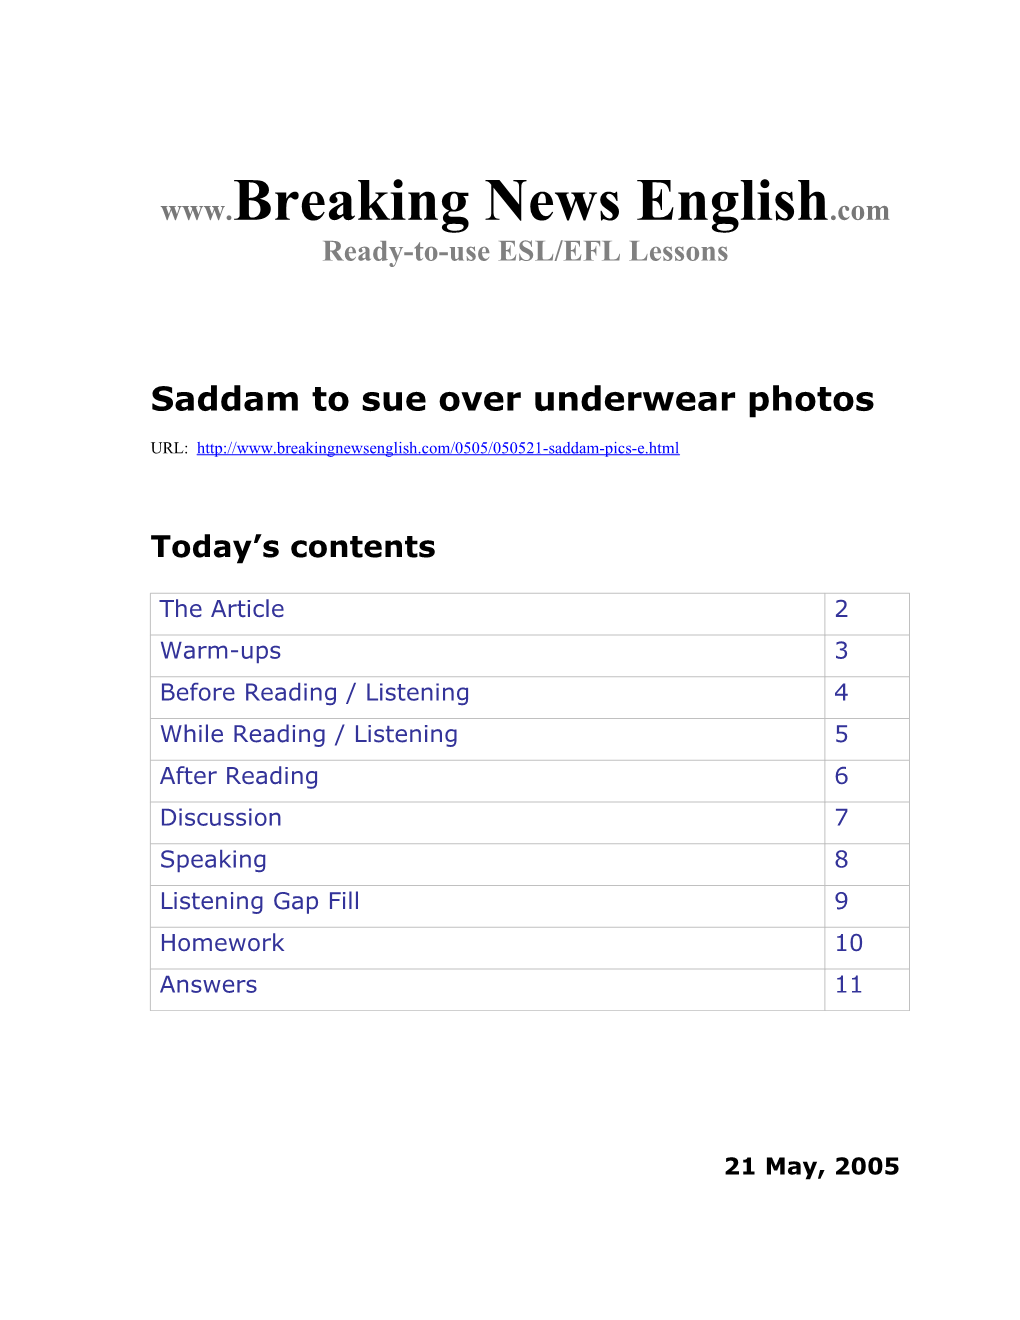 Saddam to Sue Over Underwear Photos